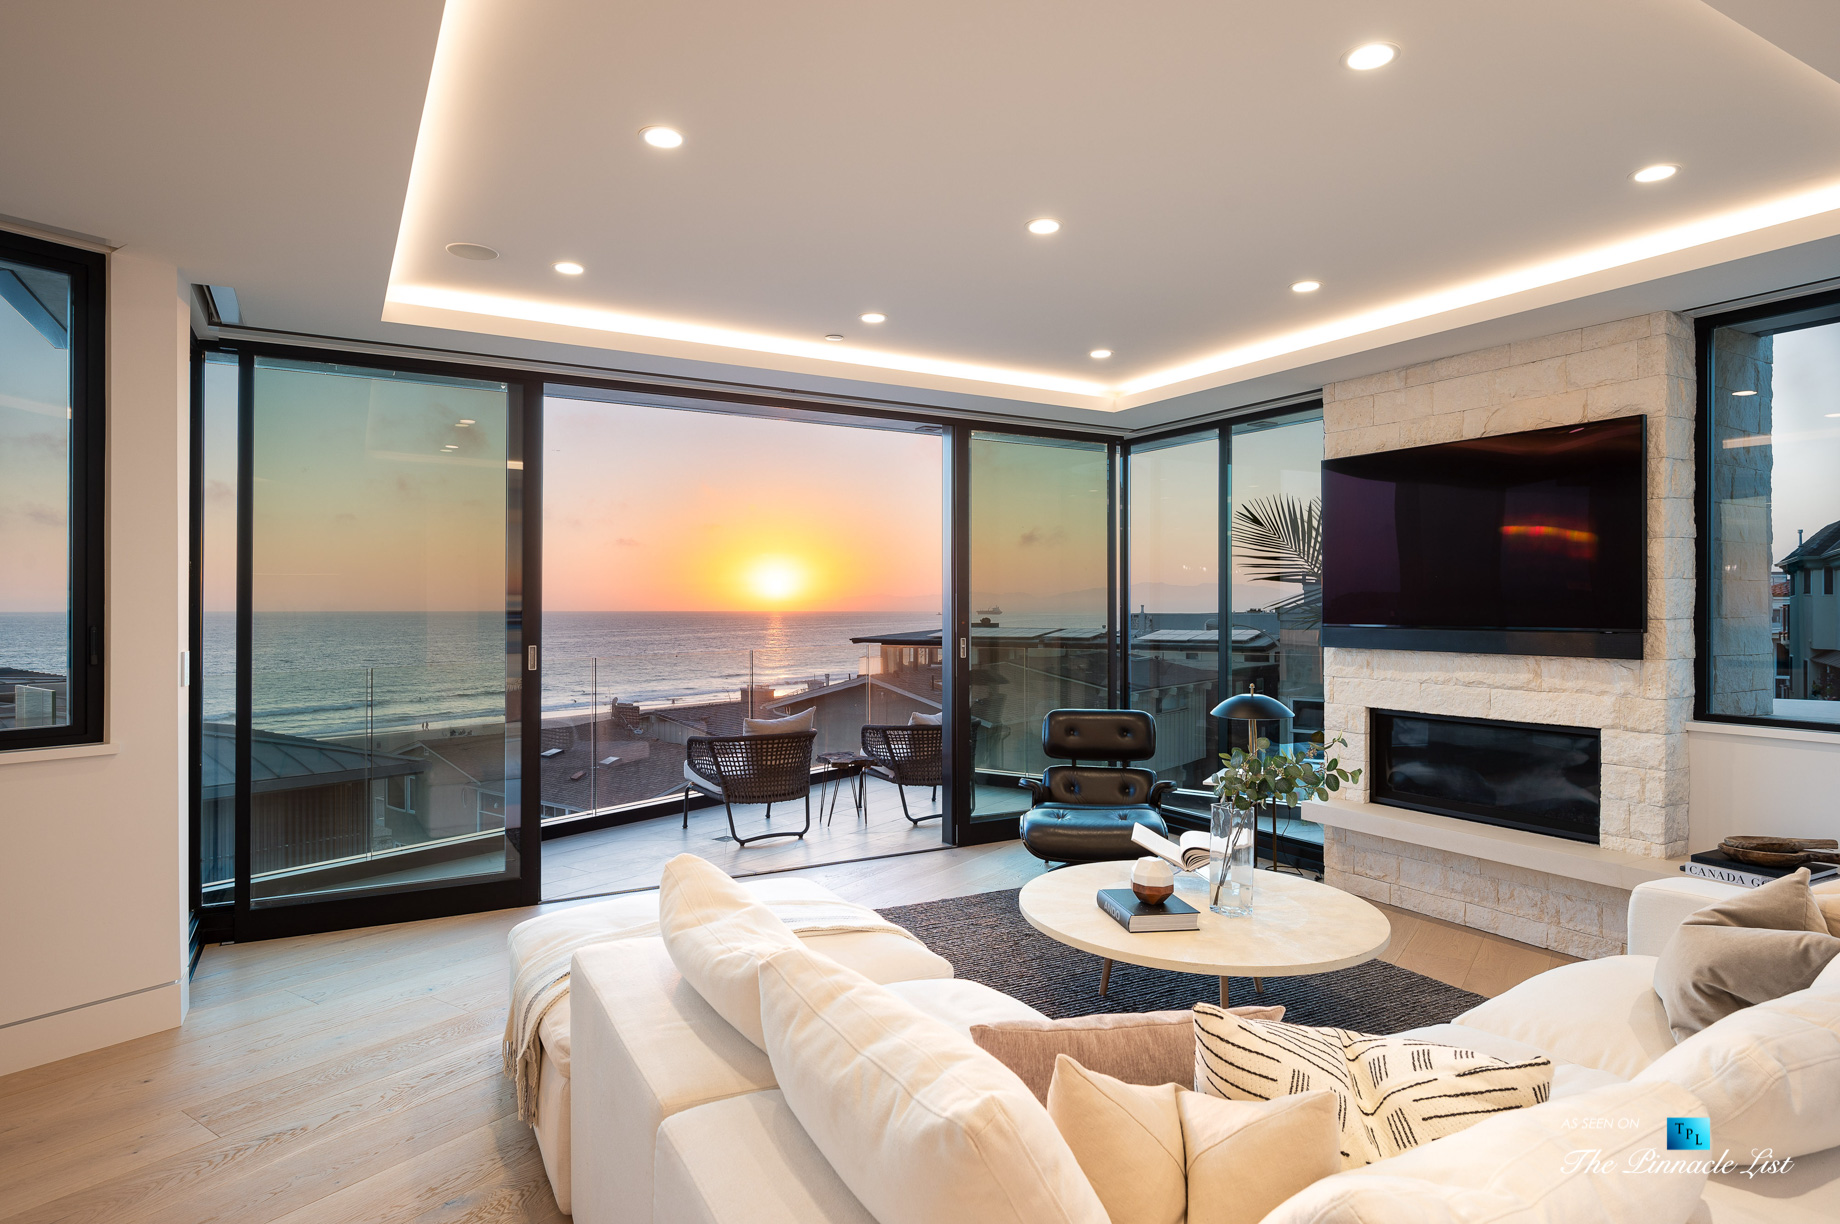 2016 Ocean Dr, Manhattan Beach, CA, USA – Sunset Living Room View – Luxury Real Estate – Modern Ocean View Home